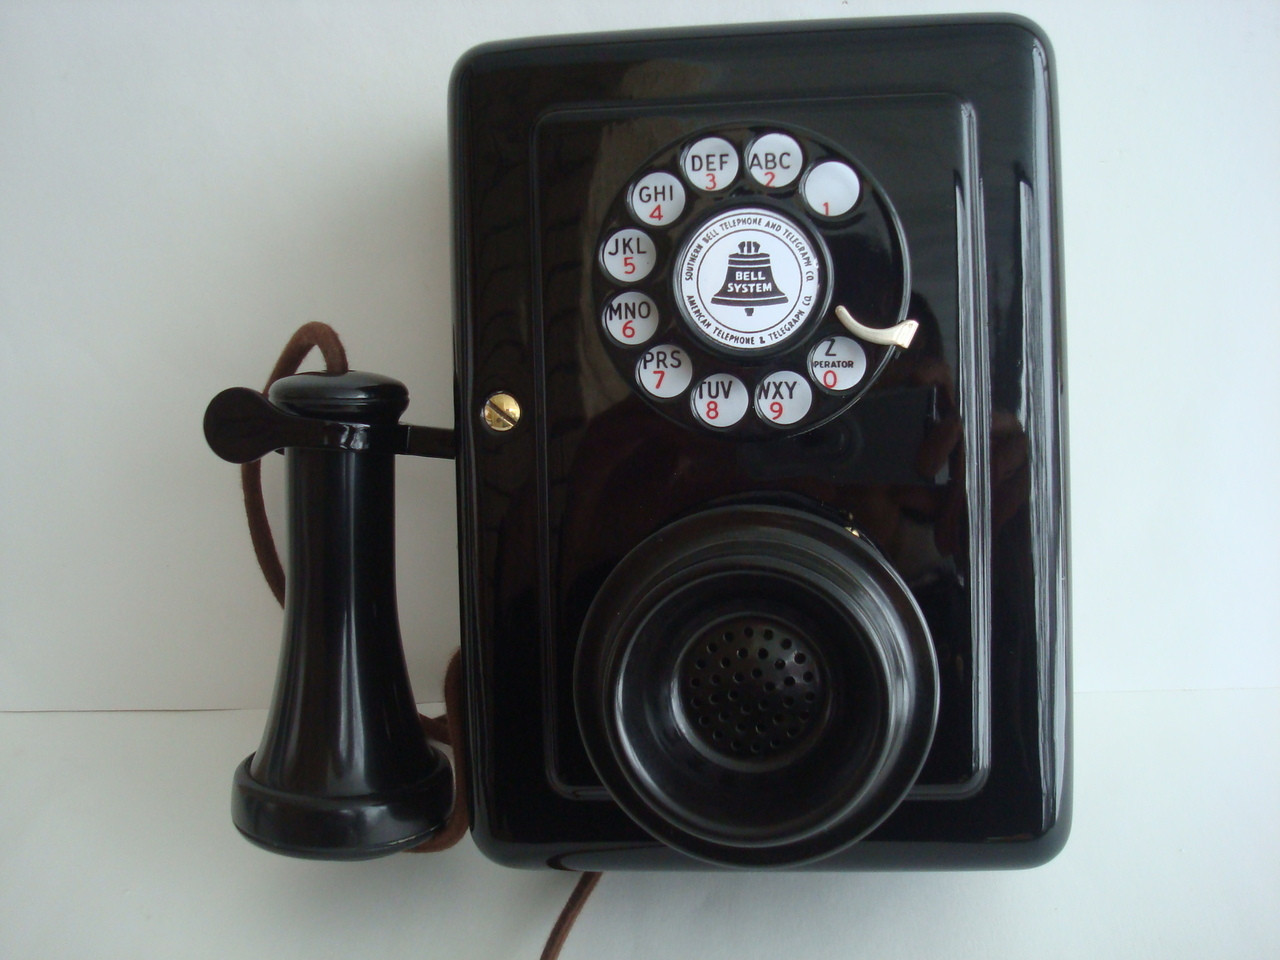 Western Electric 653 Wall Telephone